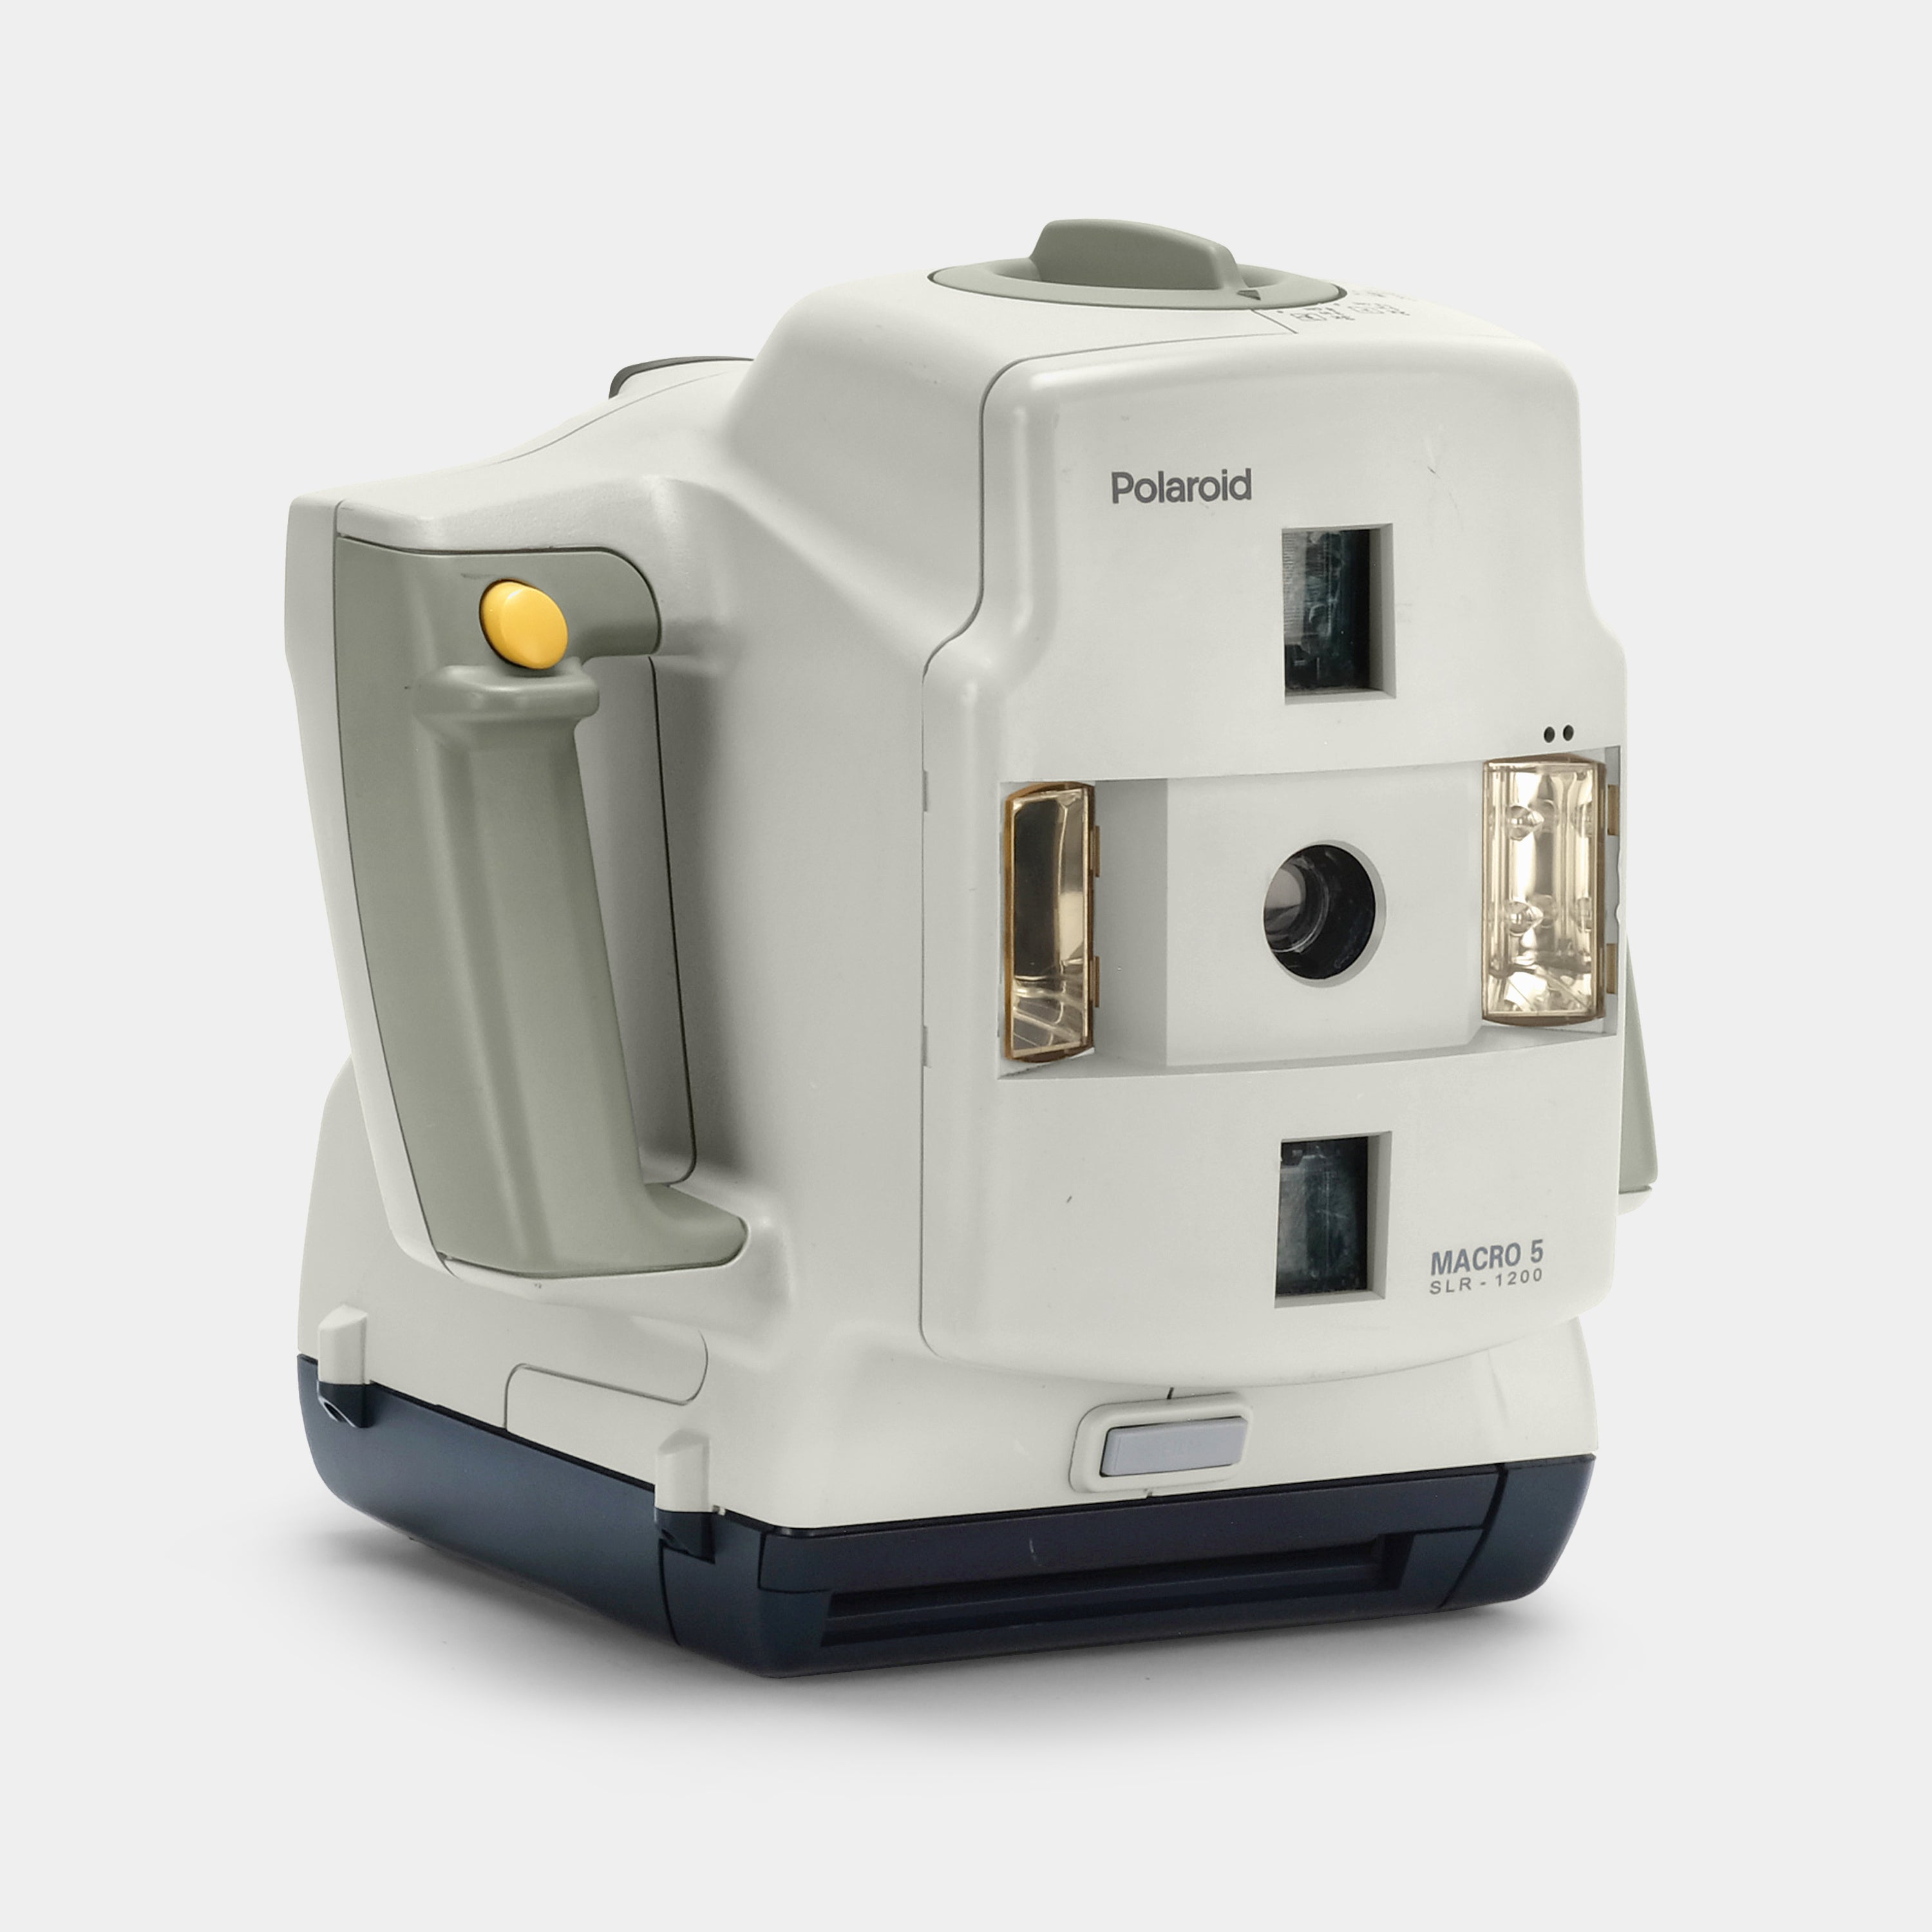 Polaroid Spectra Macro 5 1200 SLR Instant Film Camera